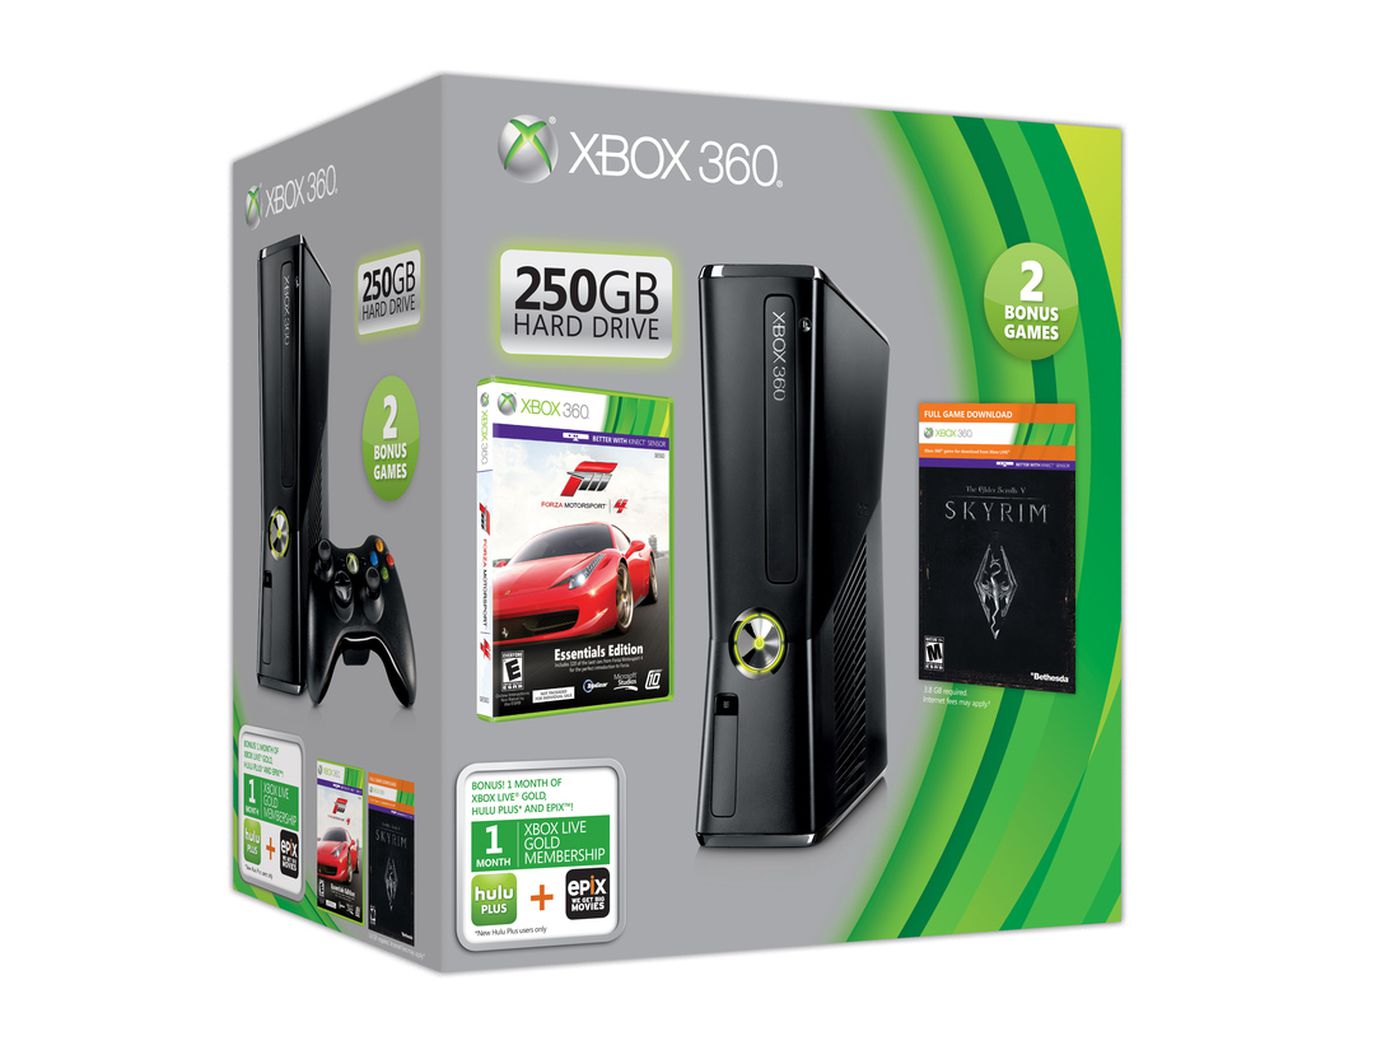 Roeispaan Pessimistisch elektrode Xbox Black Friday 2012 deals and bundles - The Verge